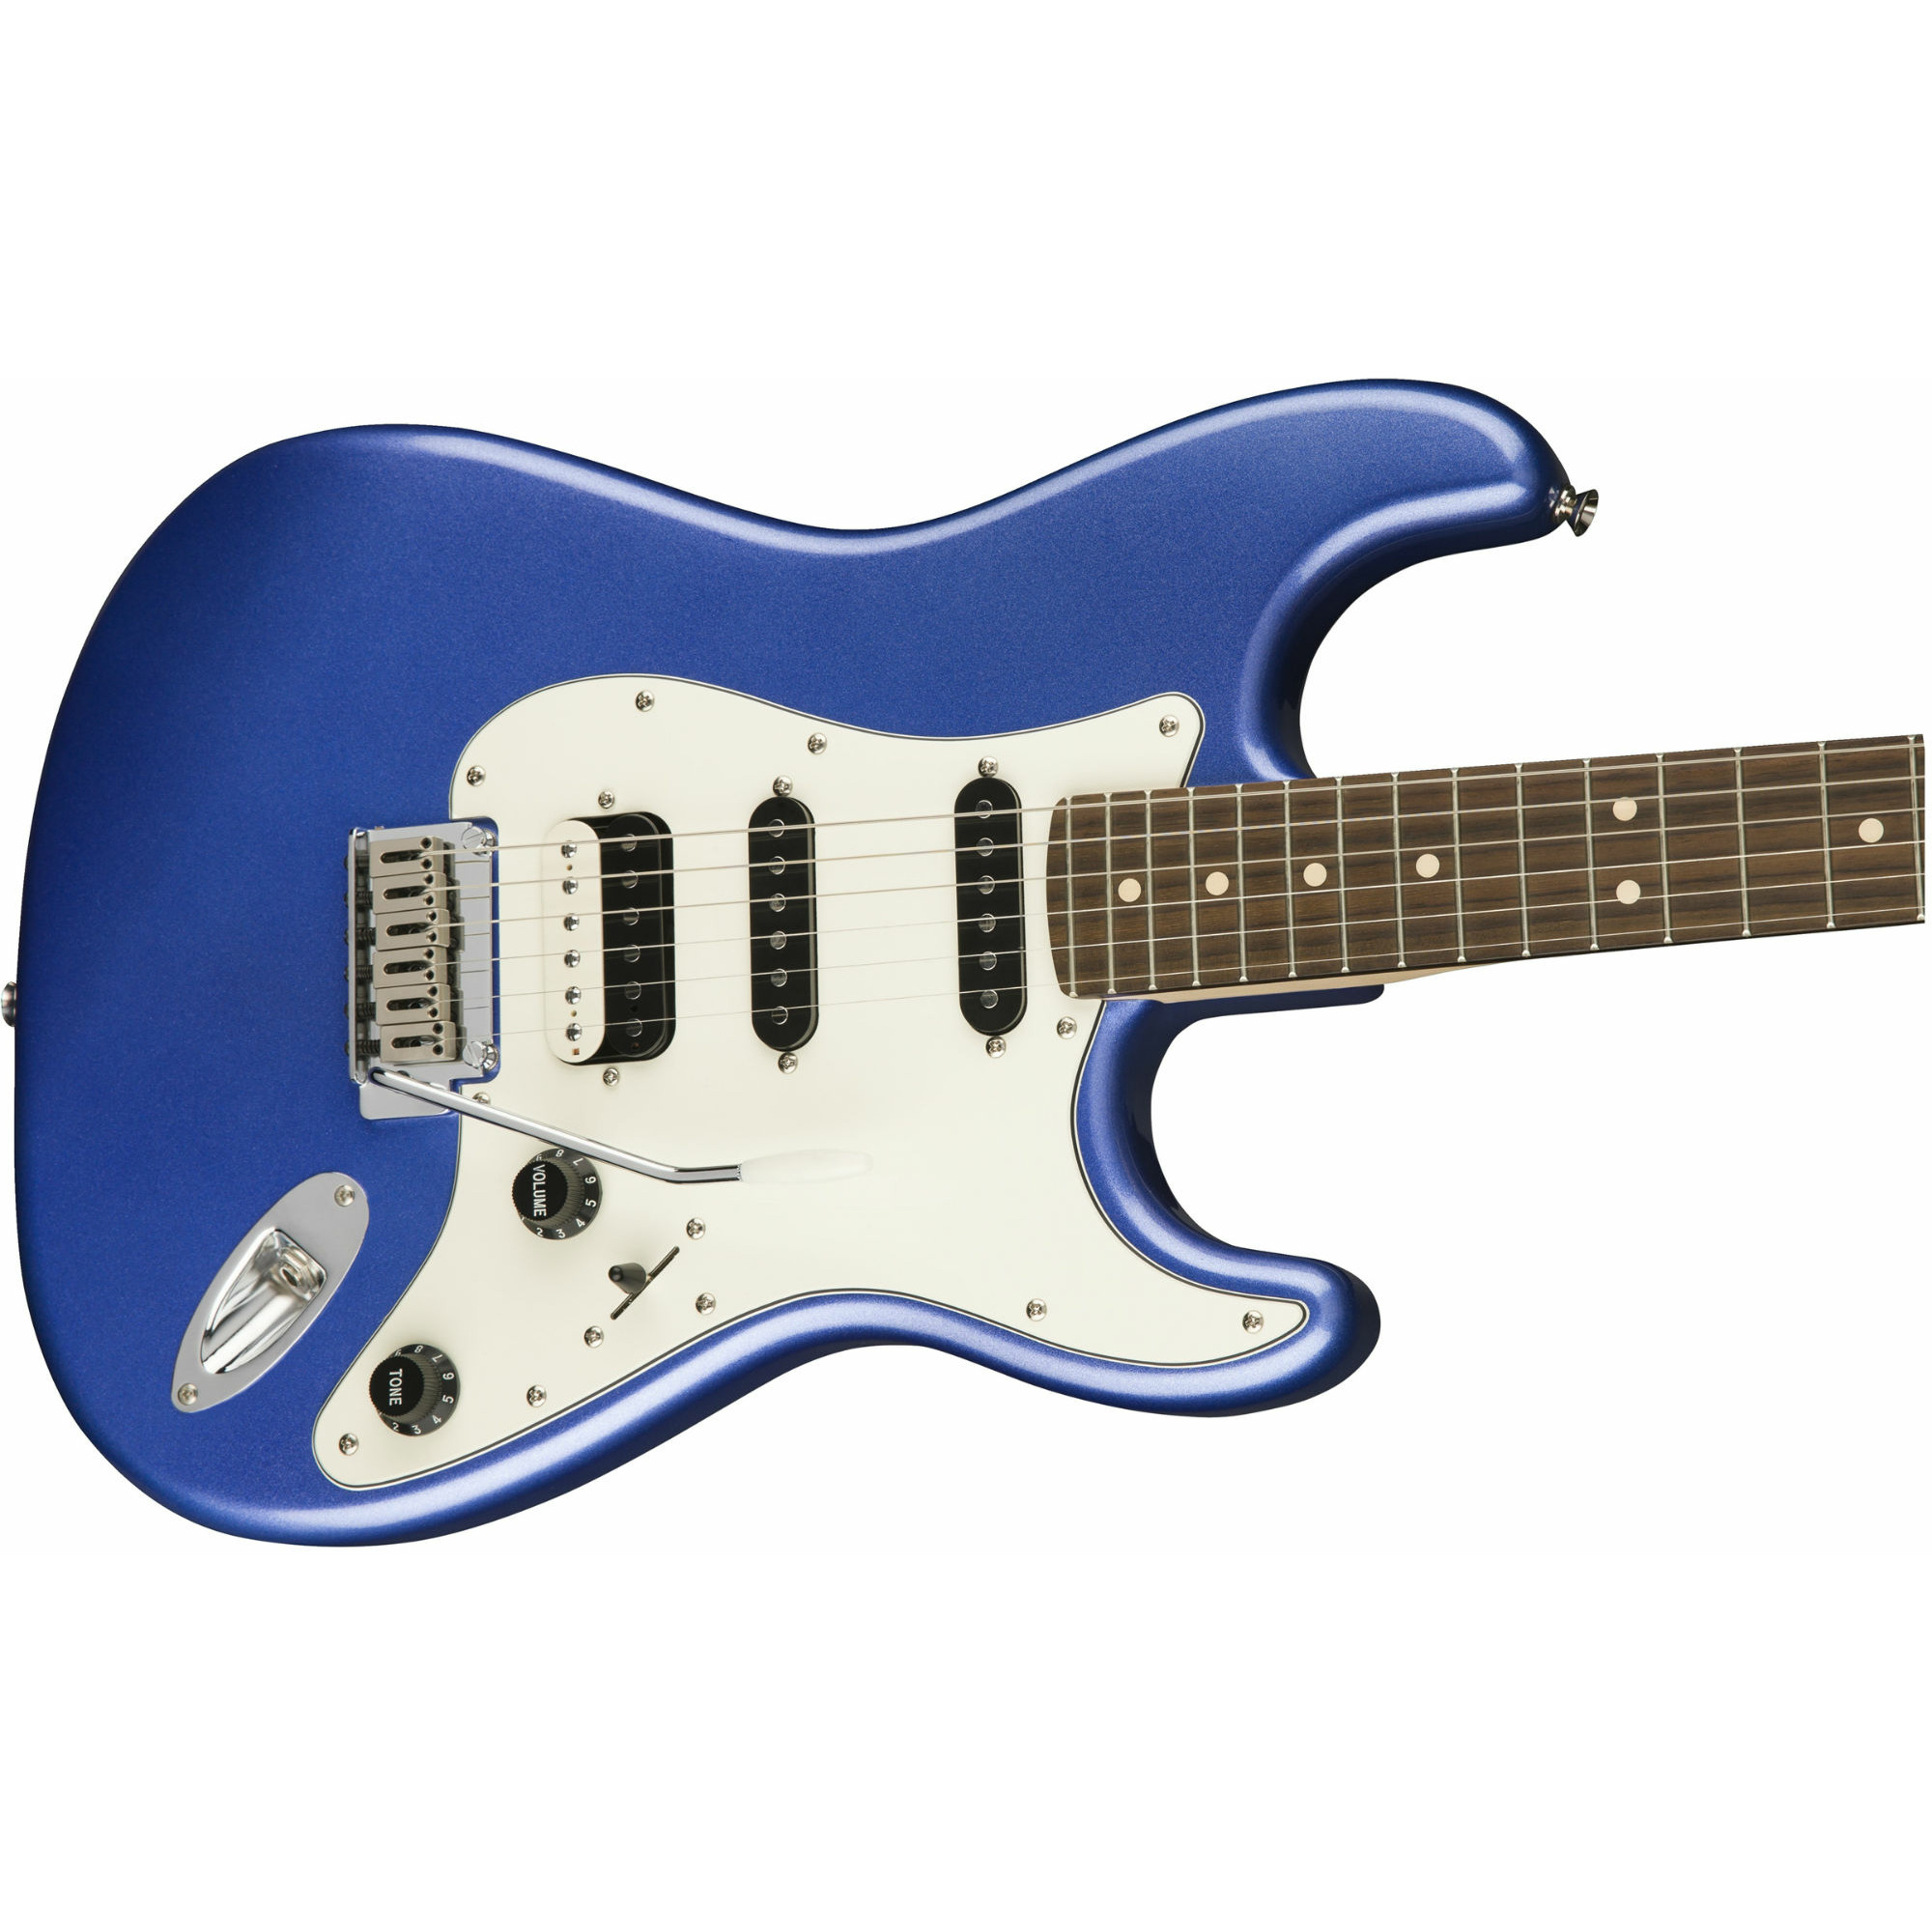 Squier stratocaster hss. Электрогитара Squier HSS. Fender Squier Stratocaster синий. Электрогитара Squier HSS Stratocaster. Электрогитара Squier голубая.